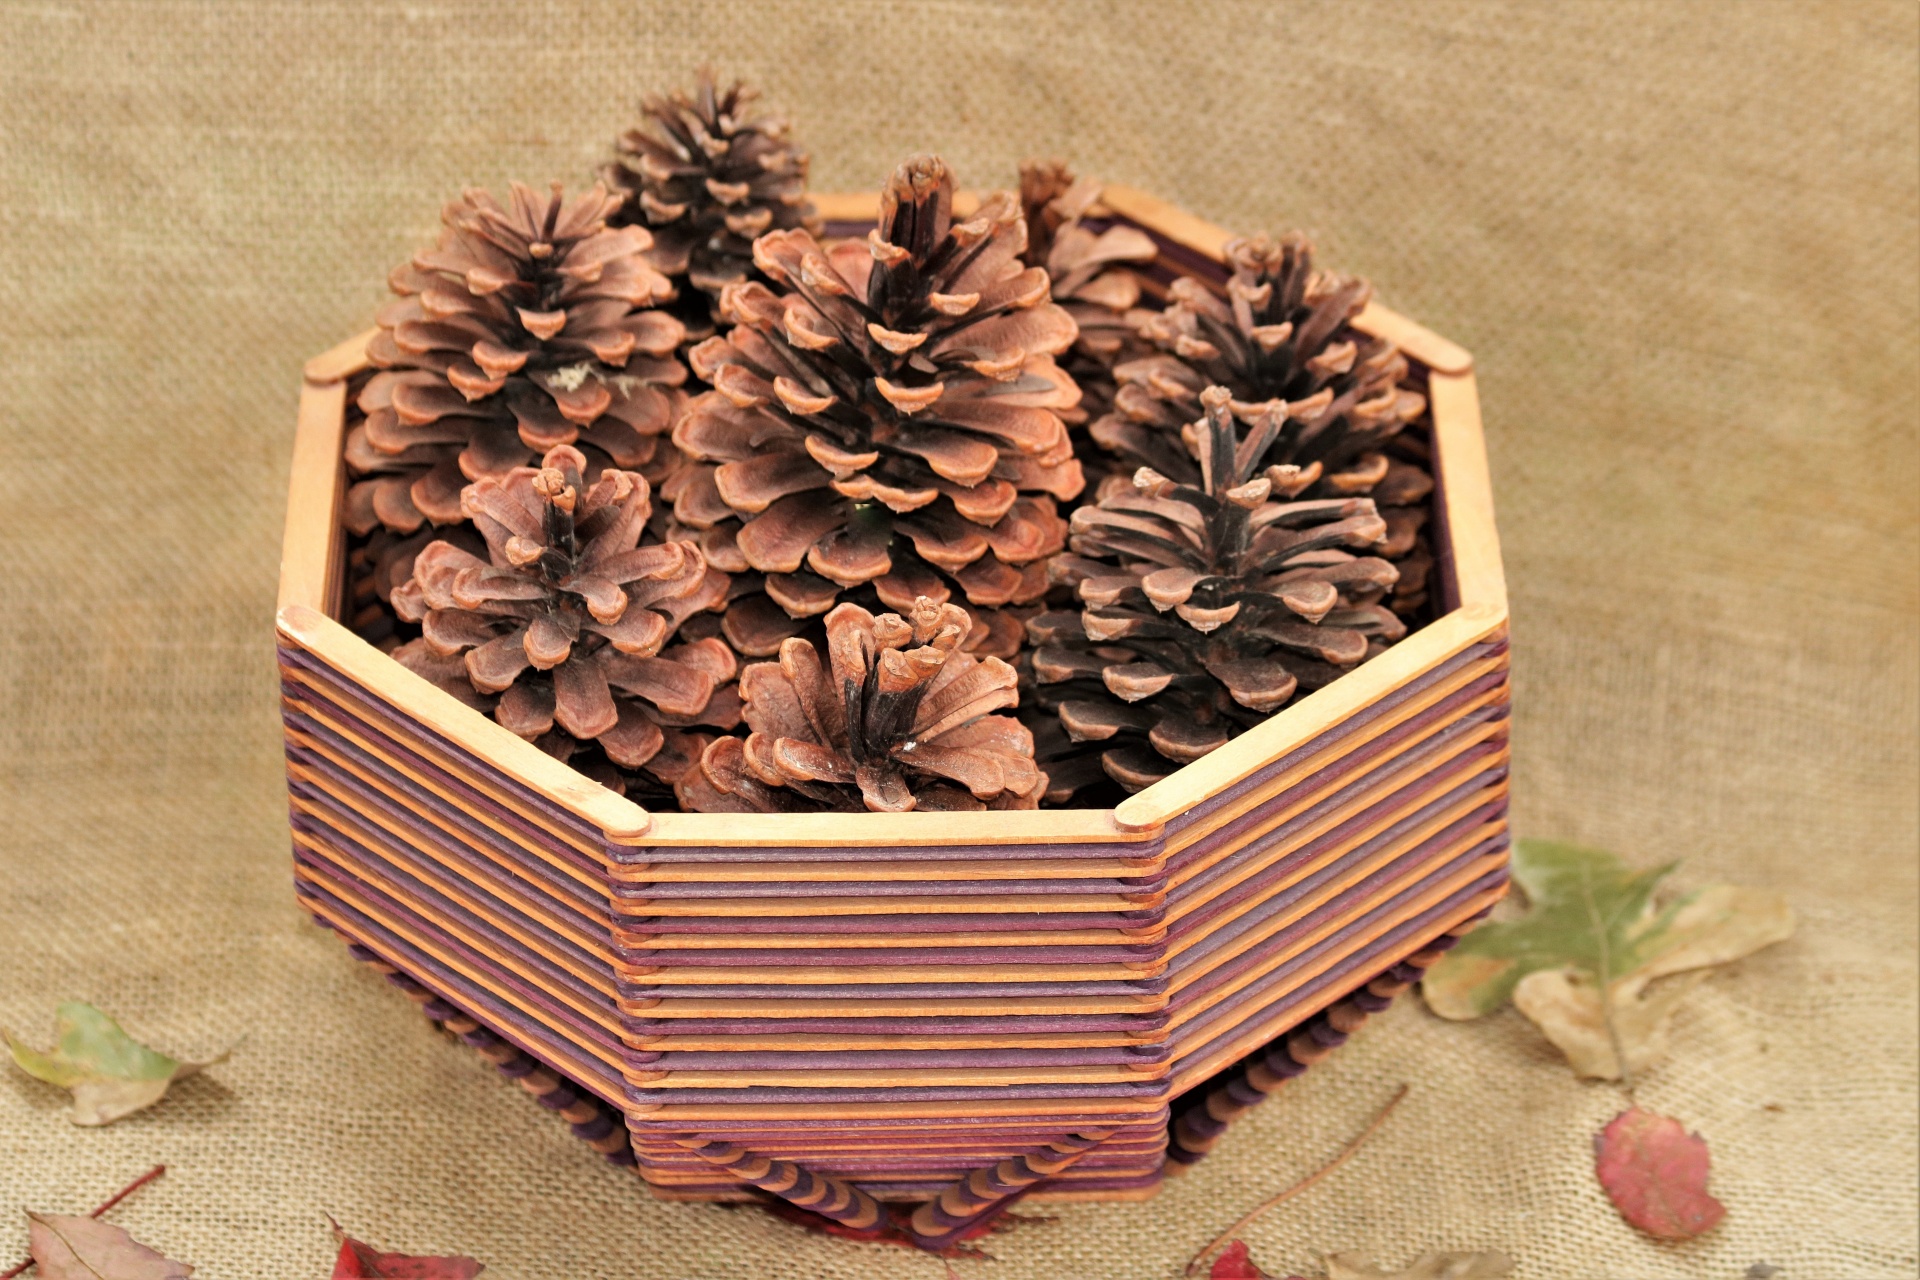 Pine Cones In Basket